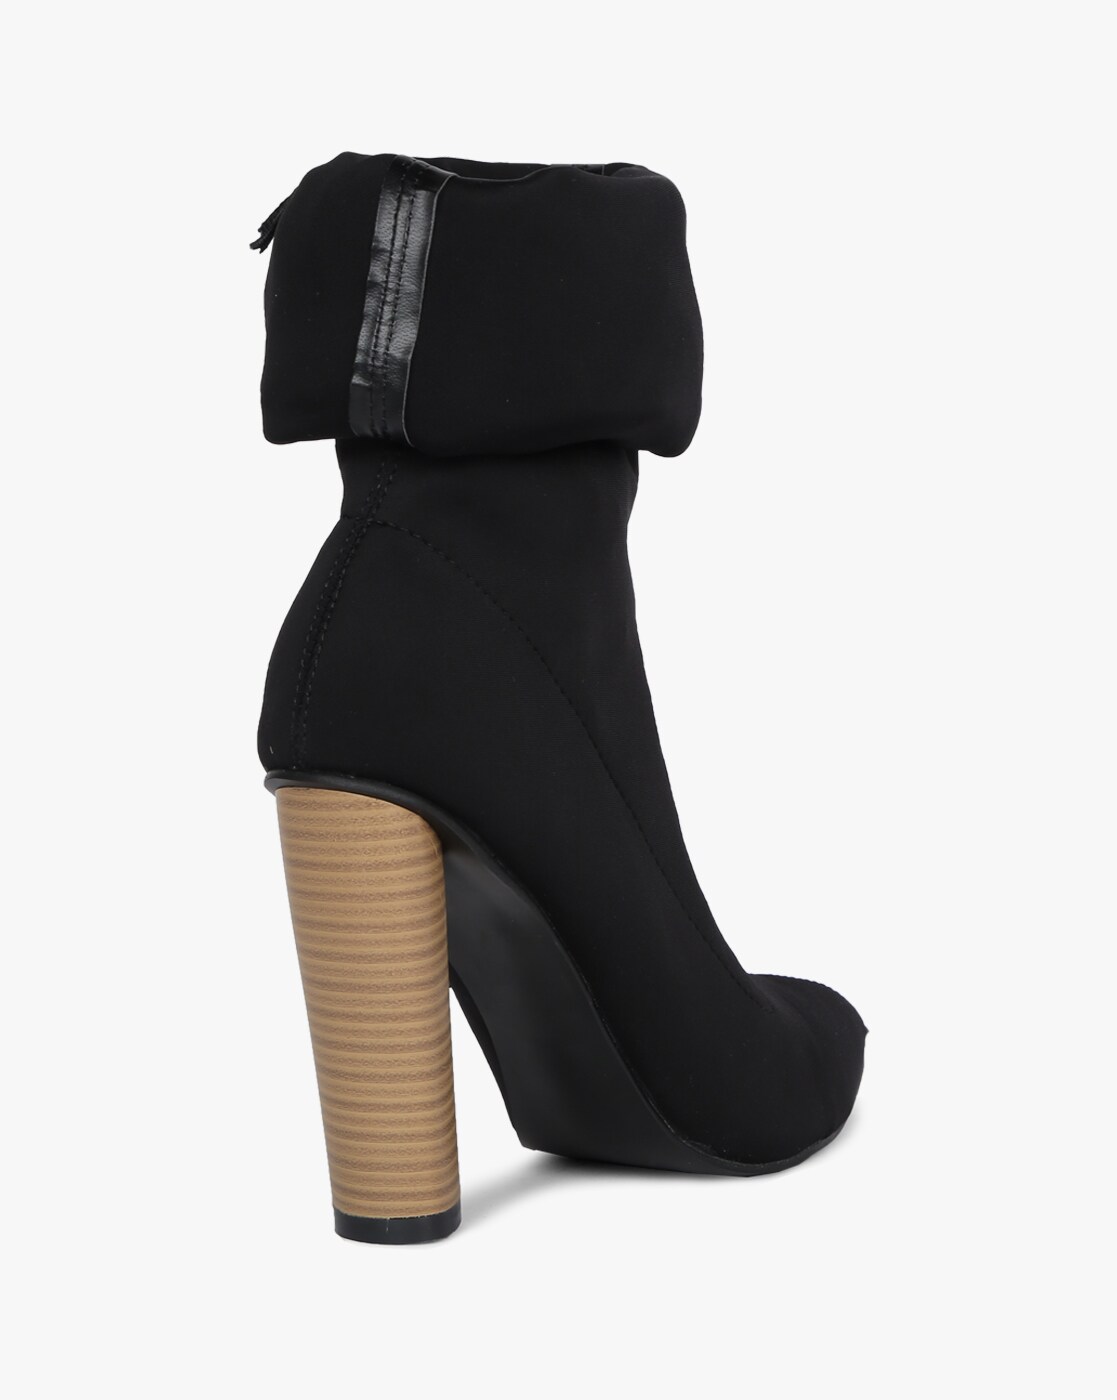 Buy > black knee high boots with heels > in stock